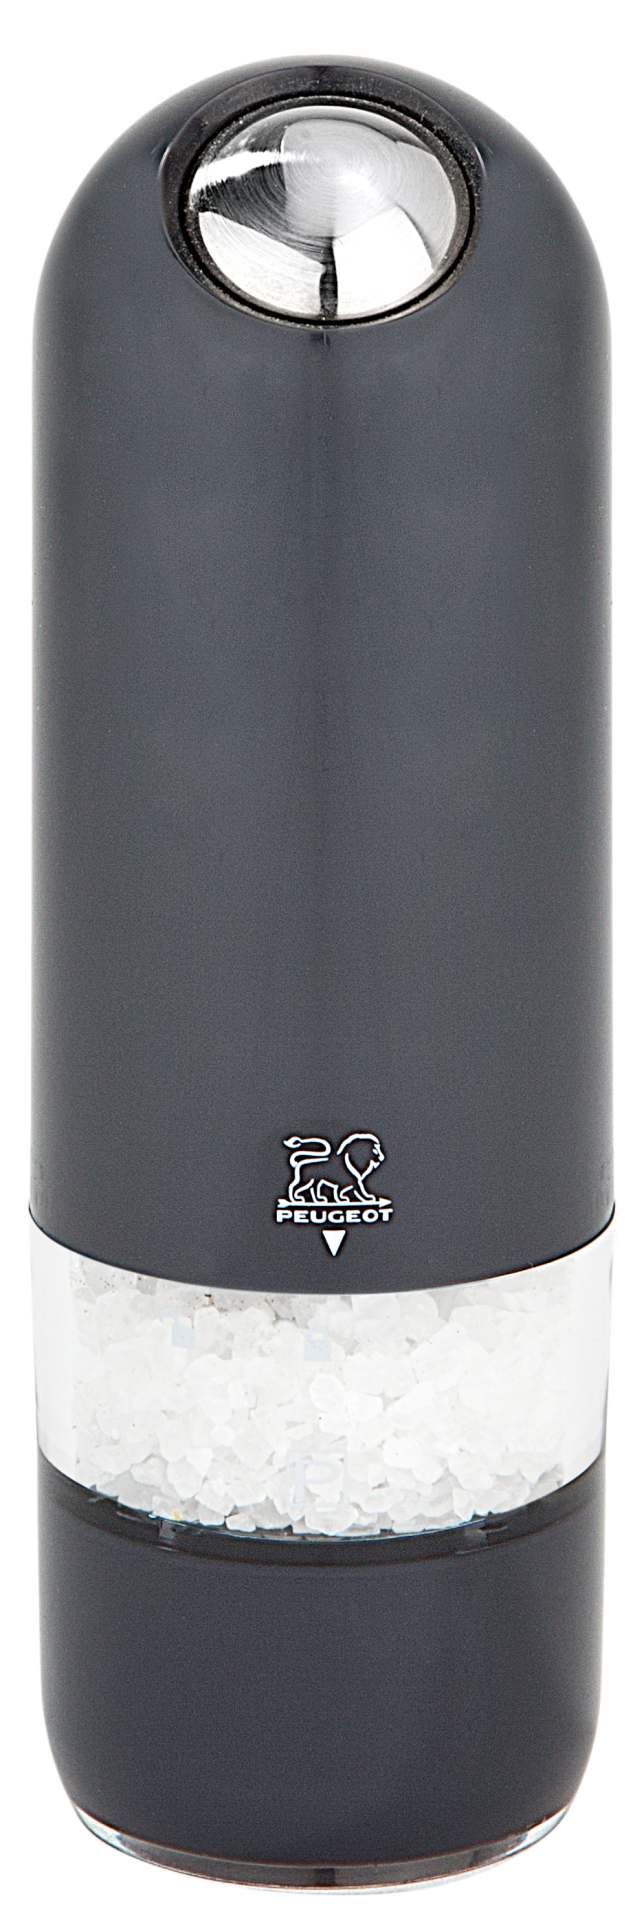 Foto Peugeot Molinillo de sal, eléctrico ALASKA gris cuarzo, 17 cm, con lu foto 279248